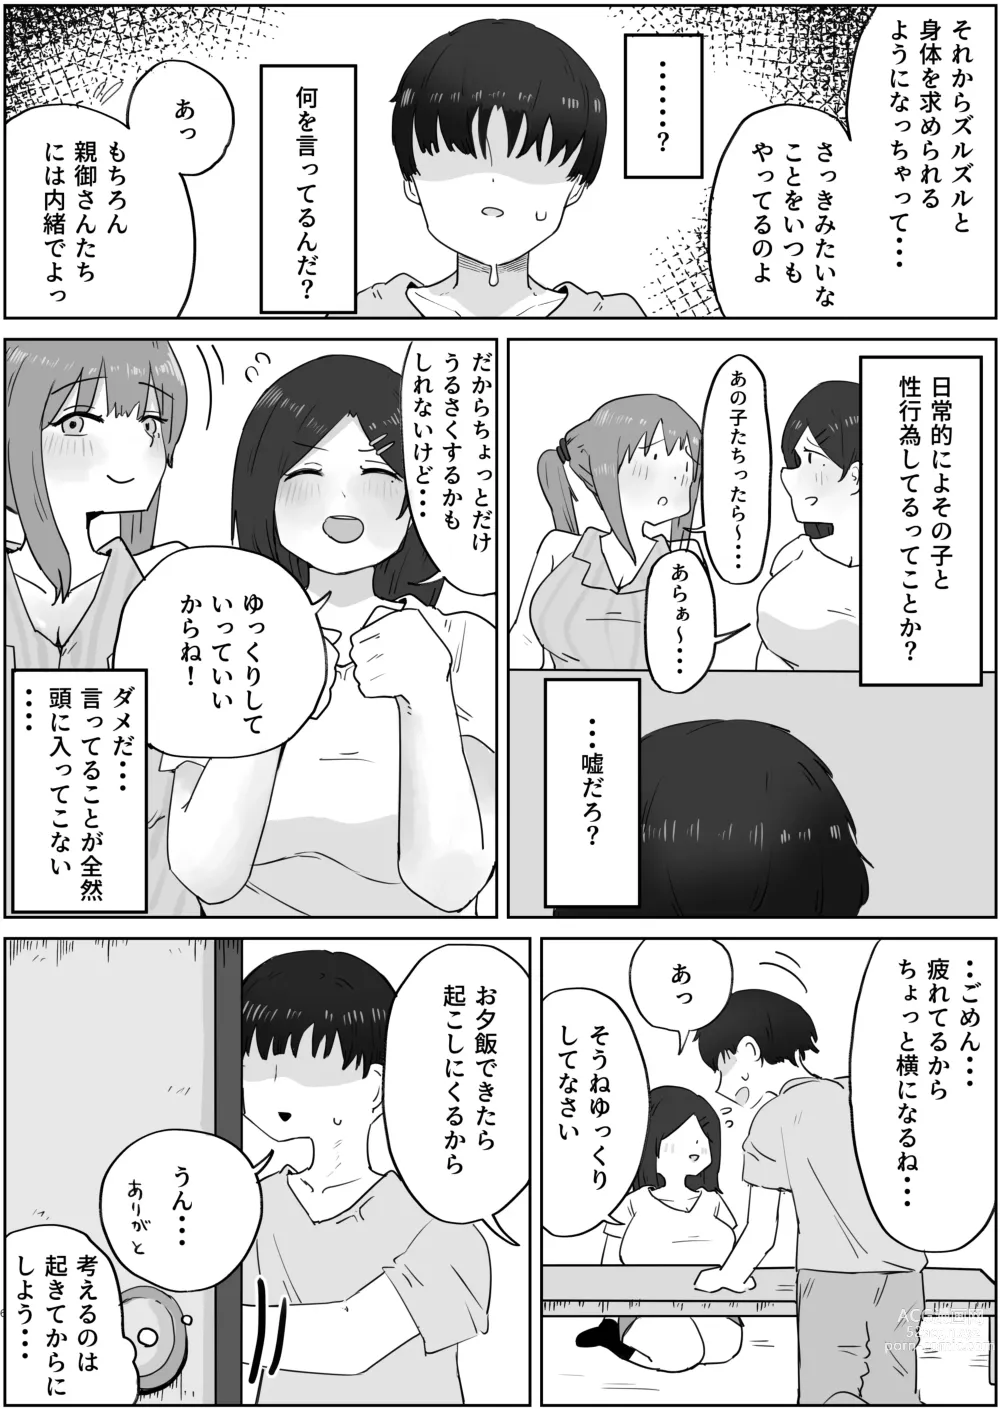 Page 5 of doujinshi Name